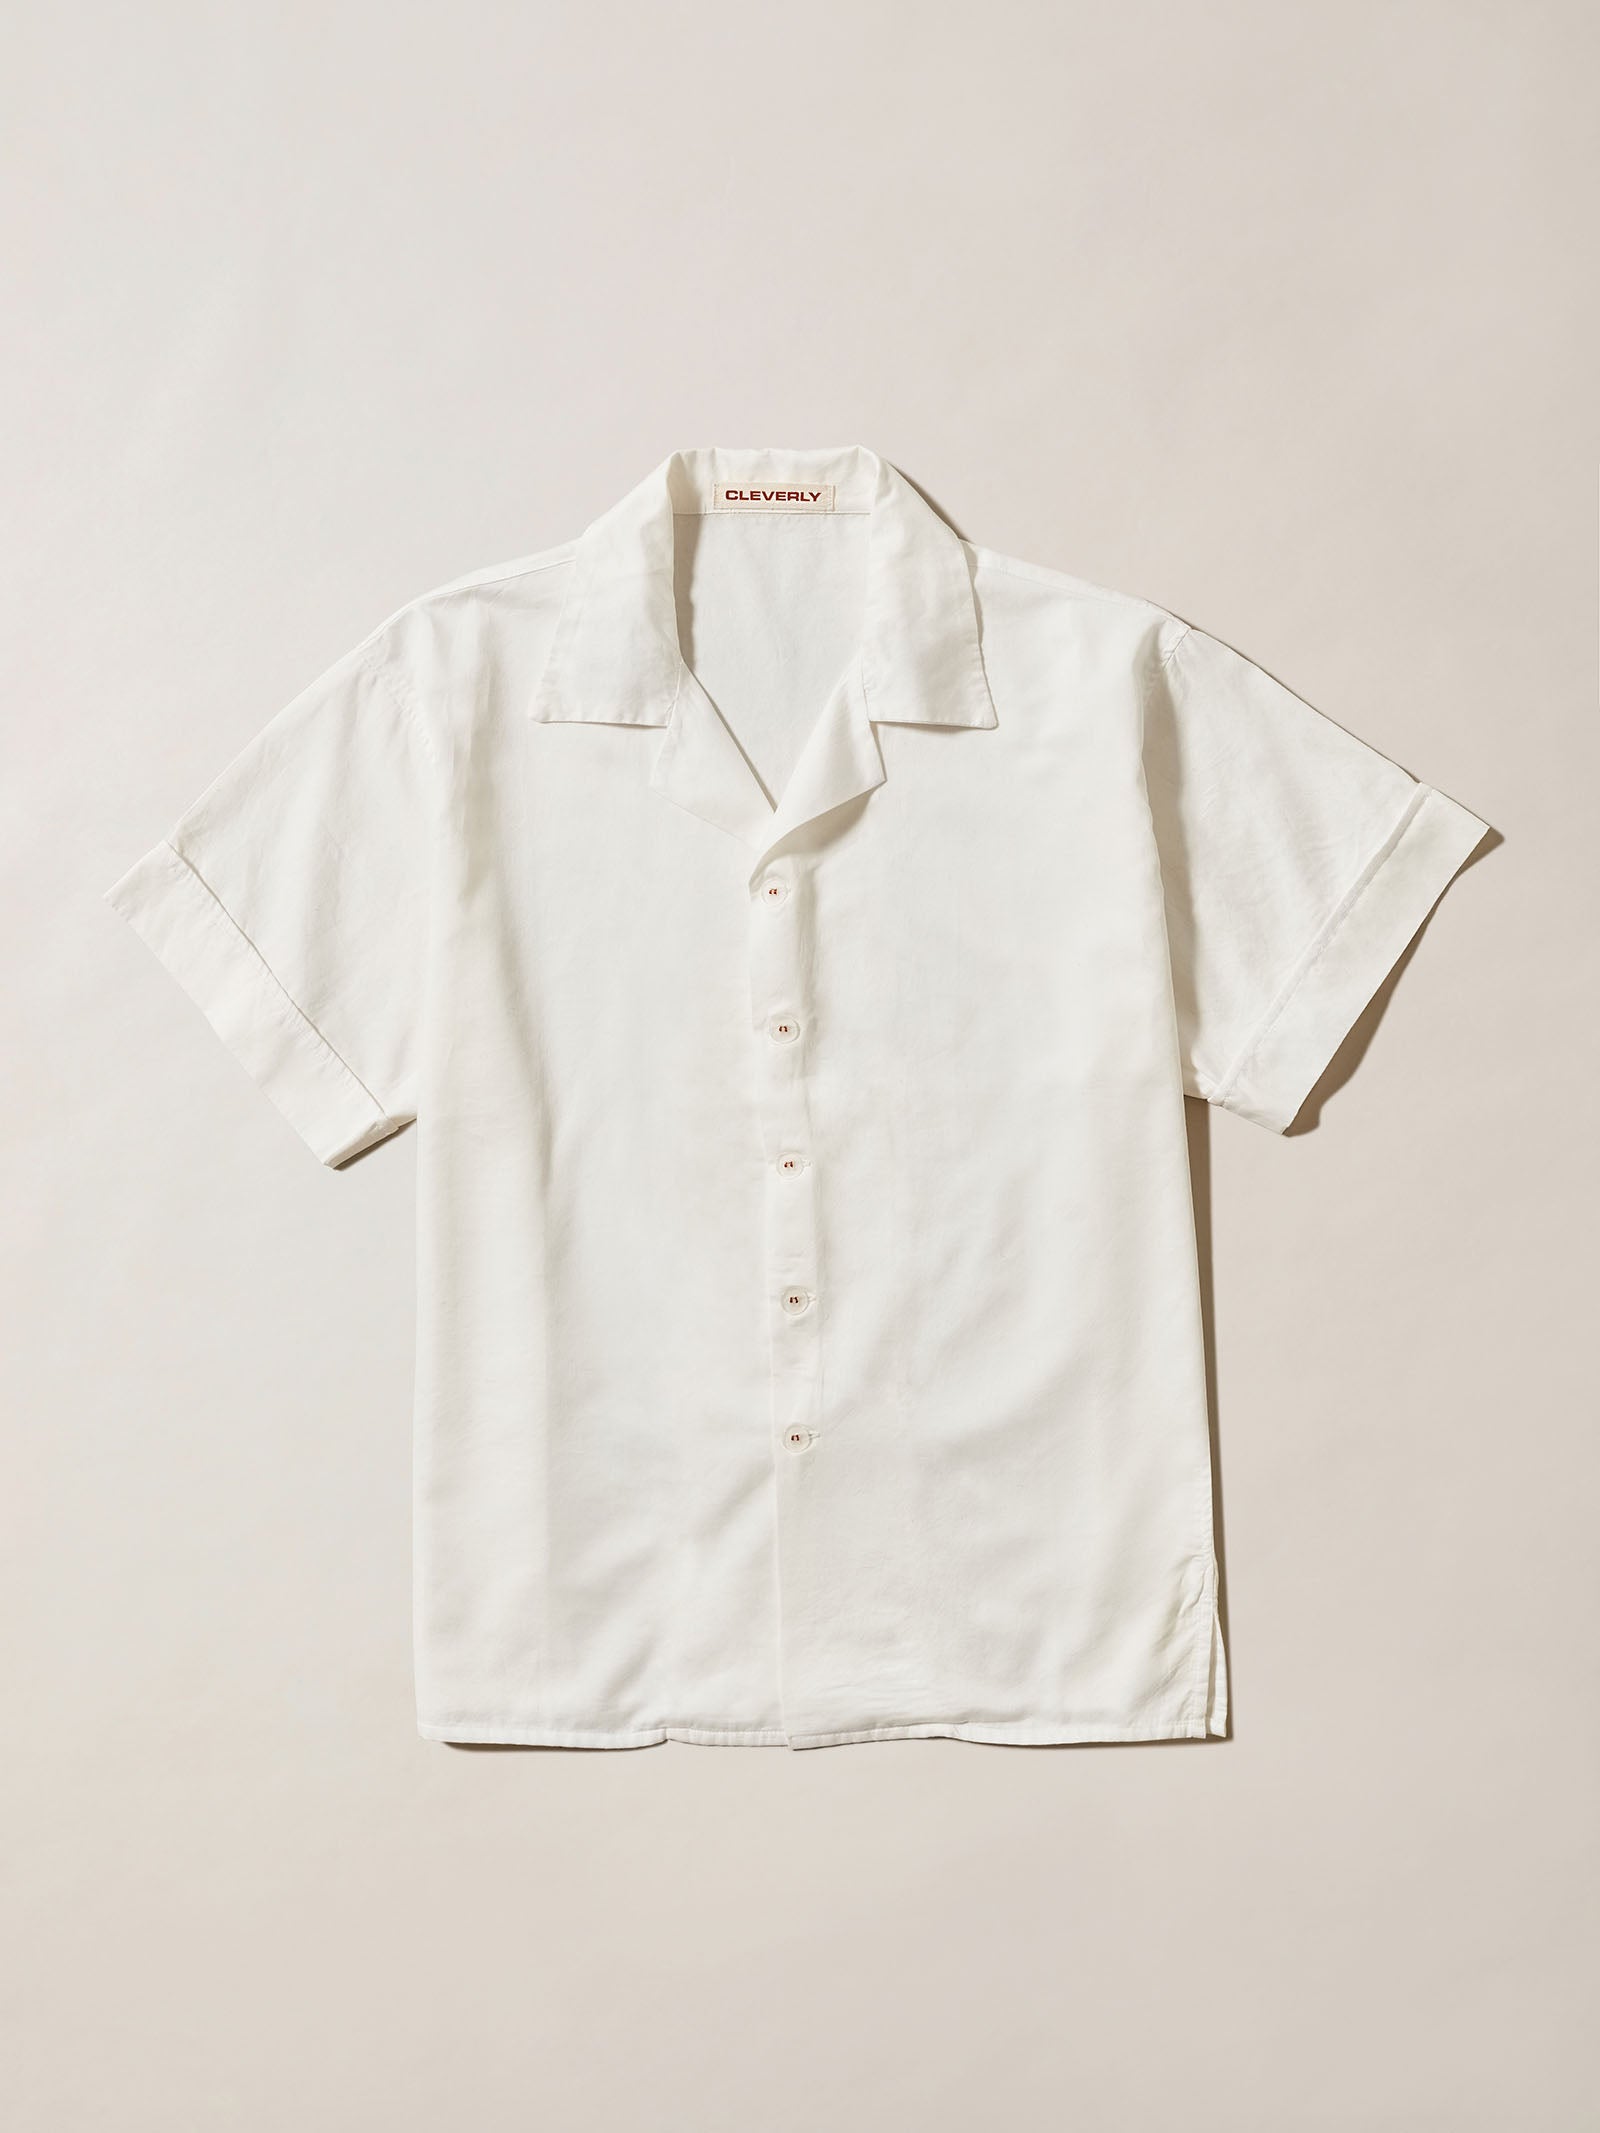 100% cotton pyjamas, soft short sleeve shirt, short sleeve pyjama shirt, white lounge shirt